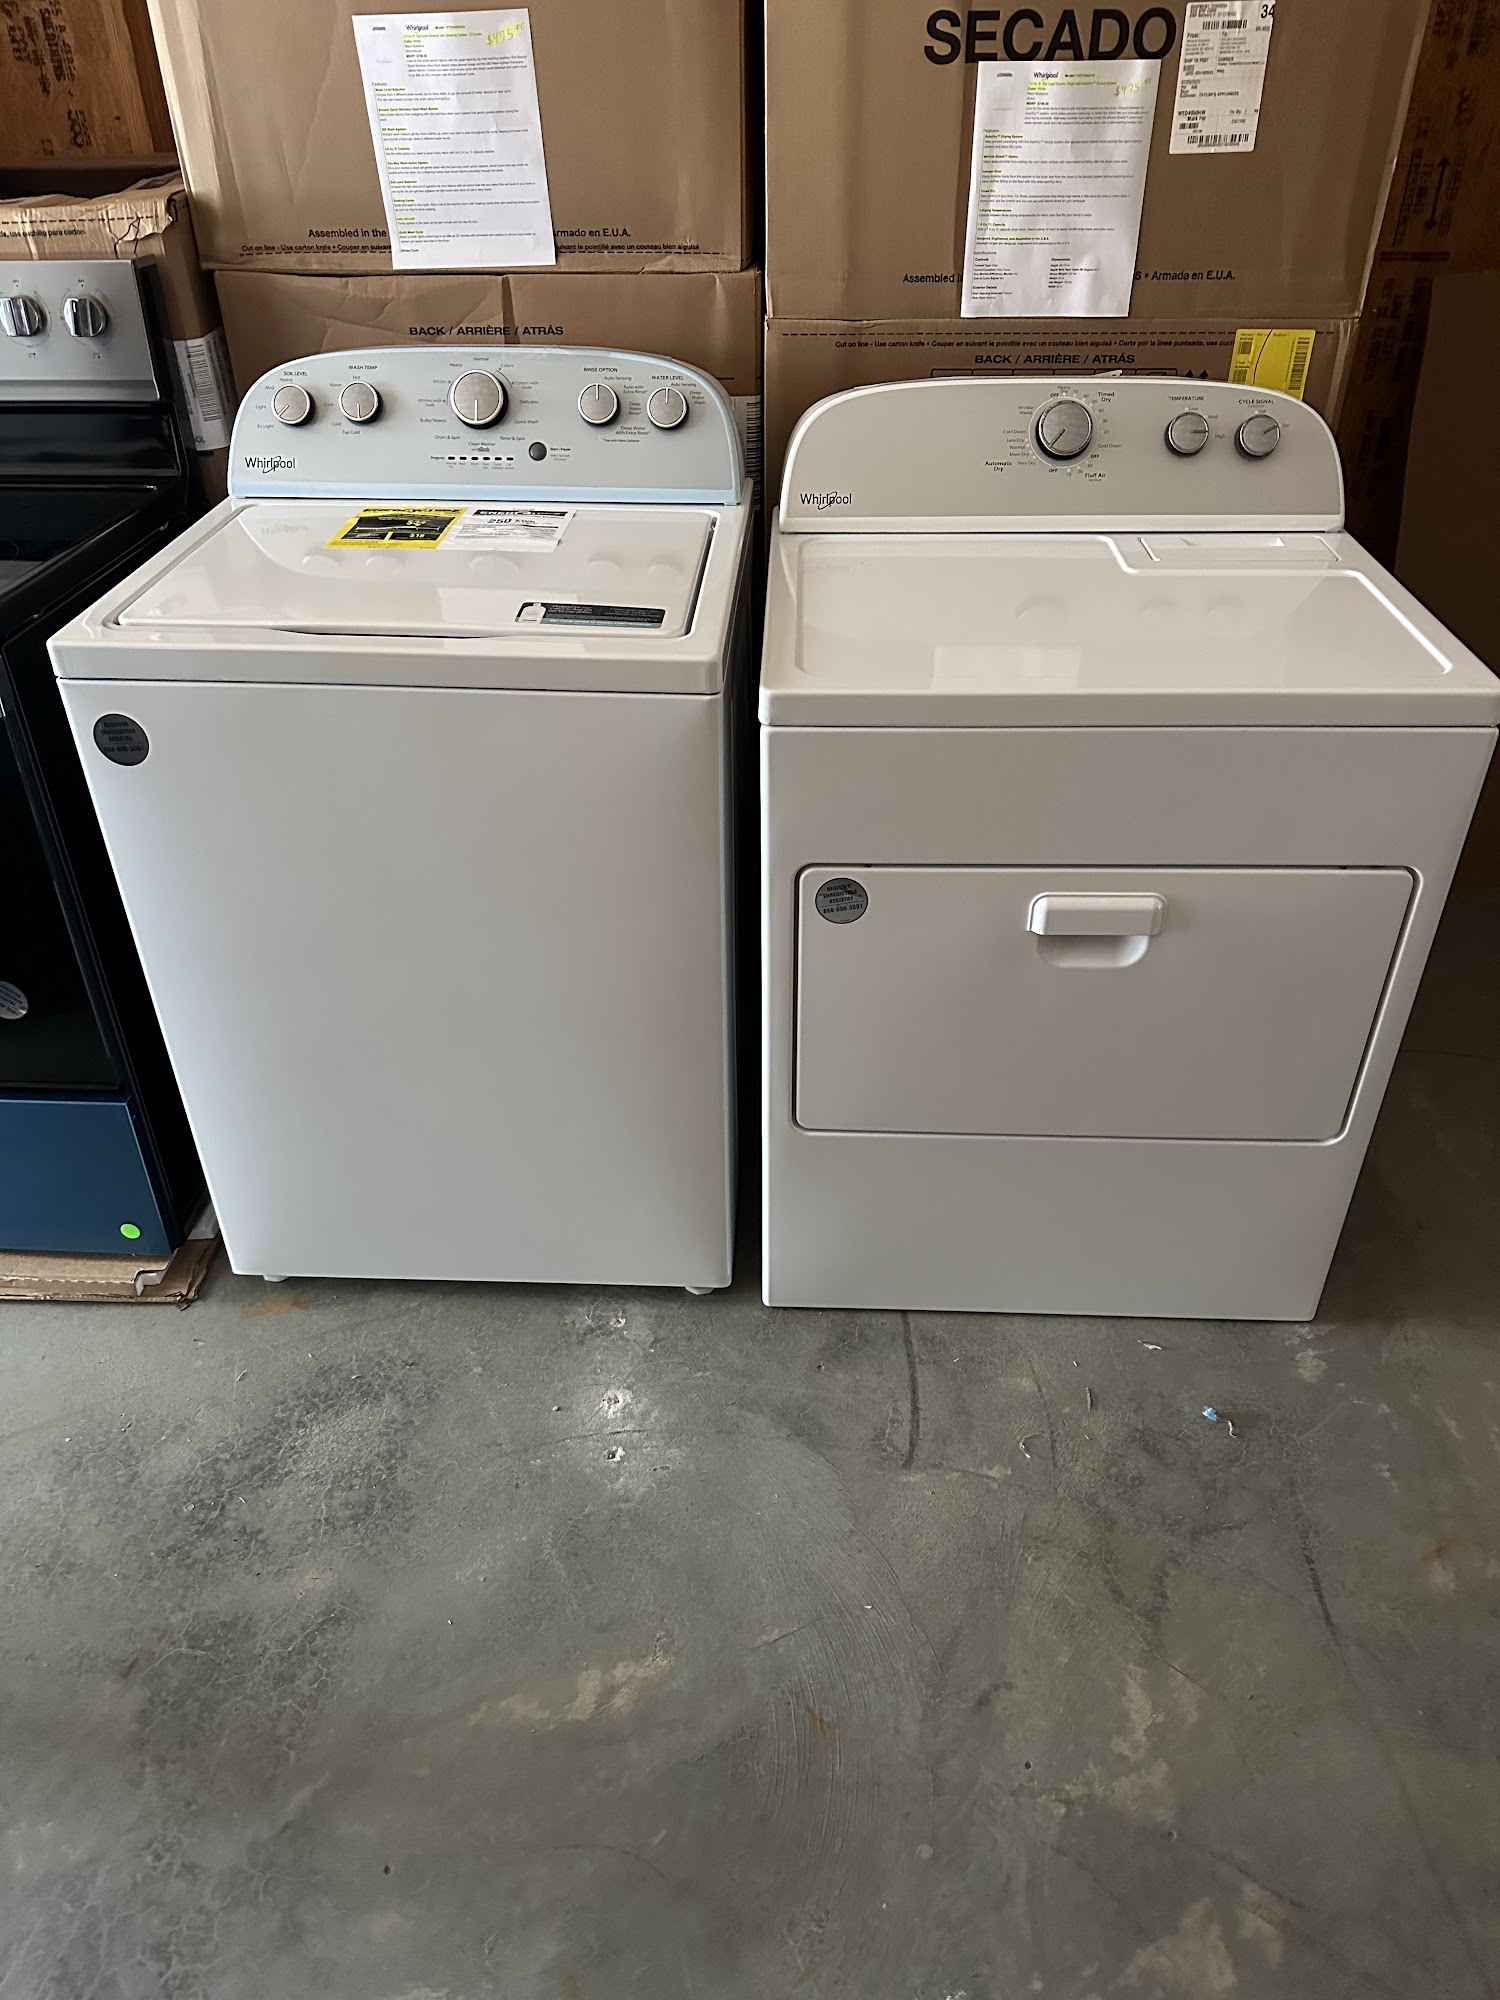 Taylor Appliances 3991 KY-90, Bronston Kentucky 42518